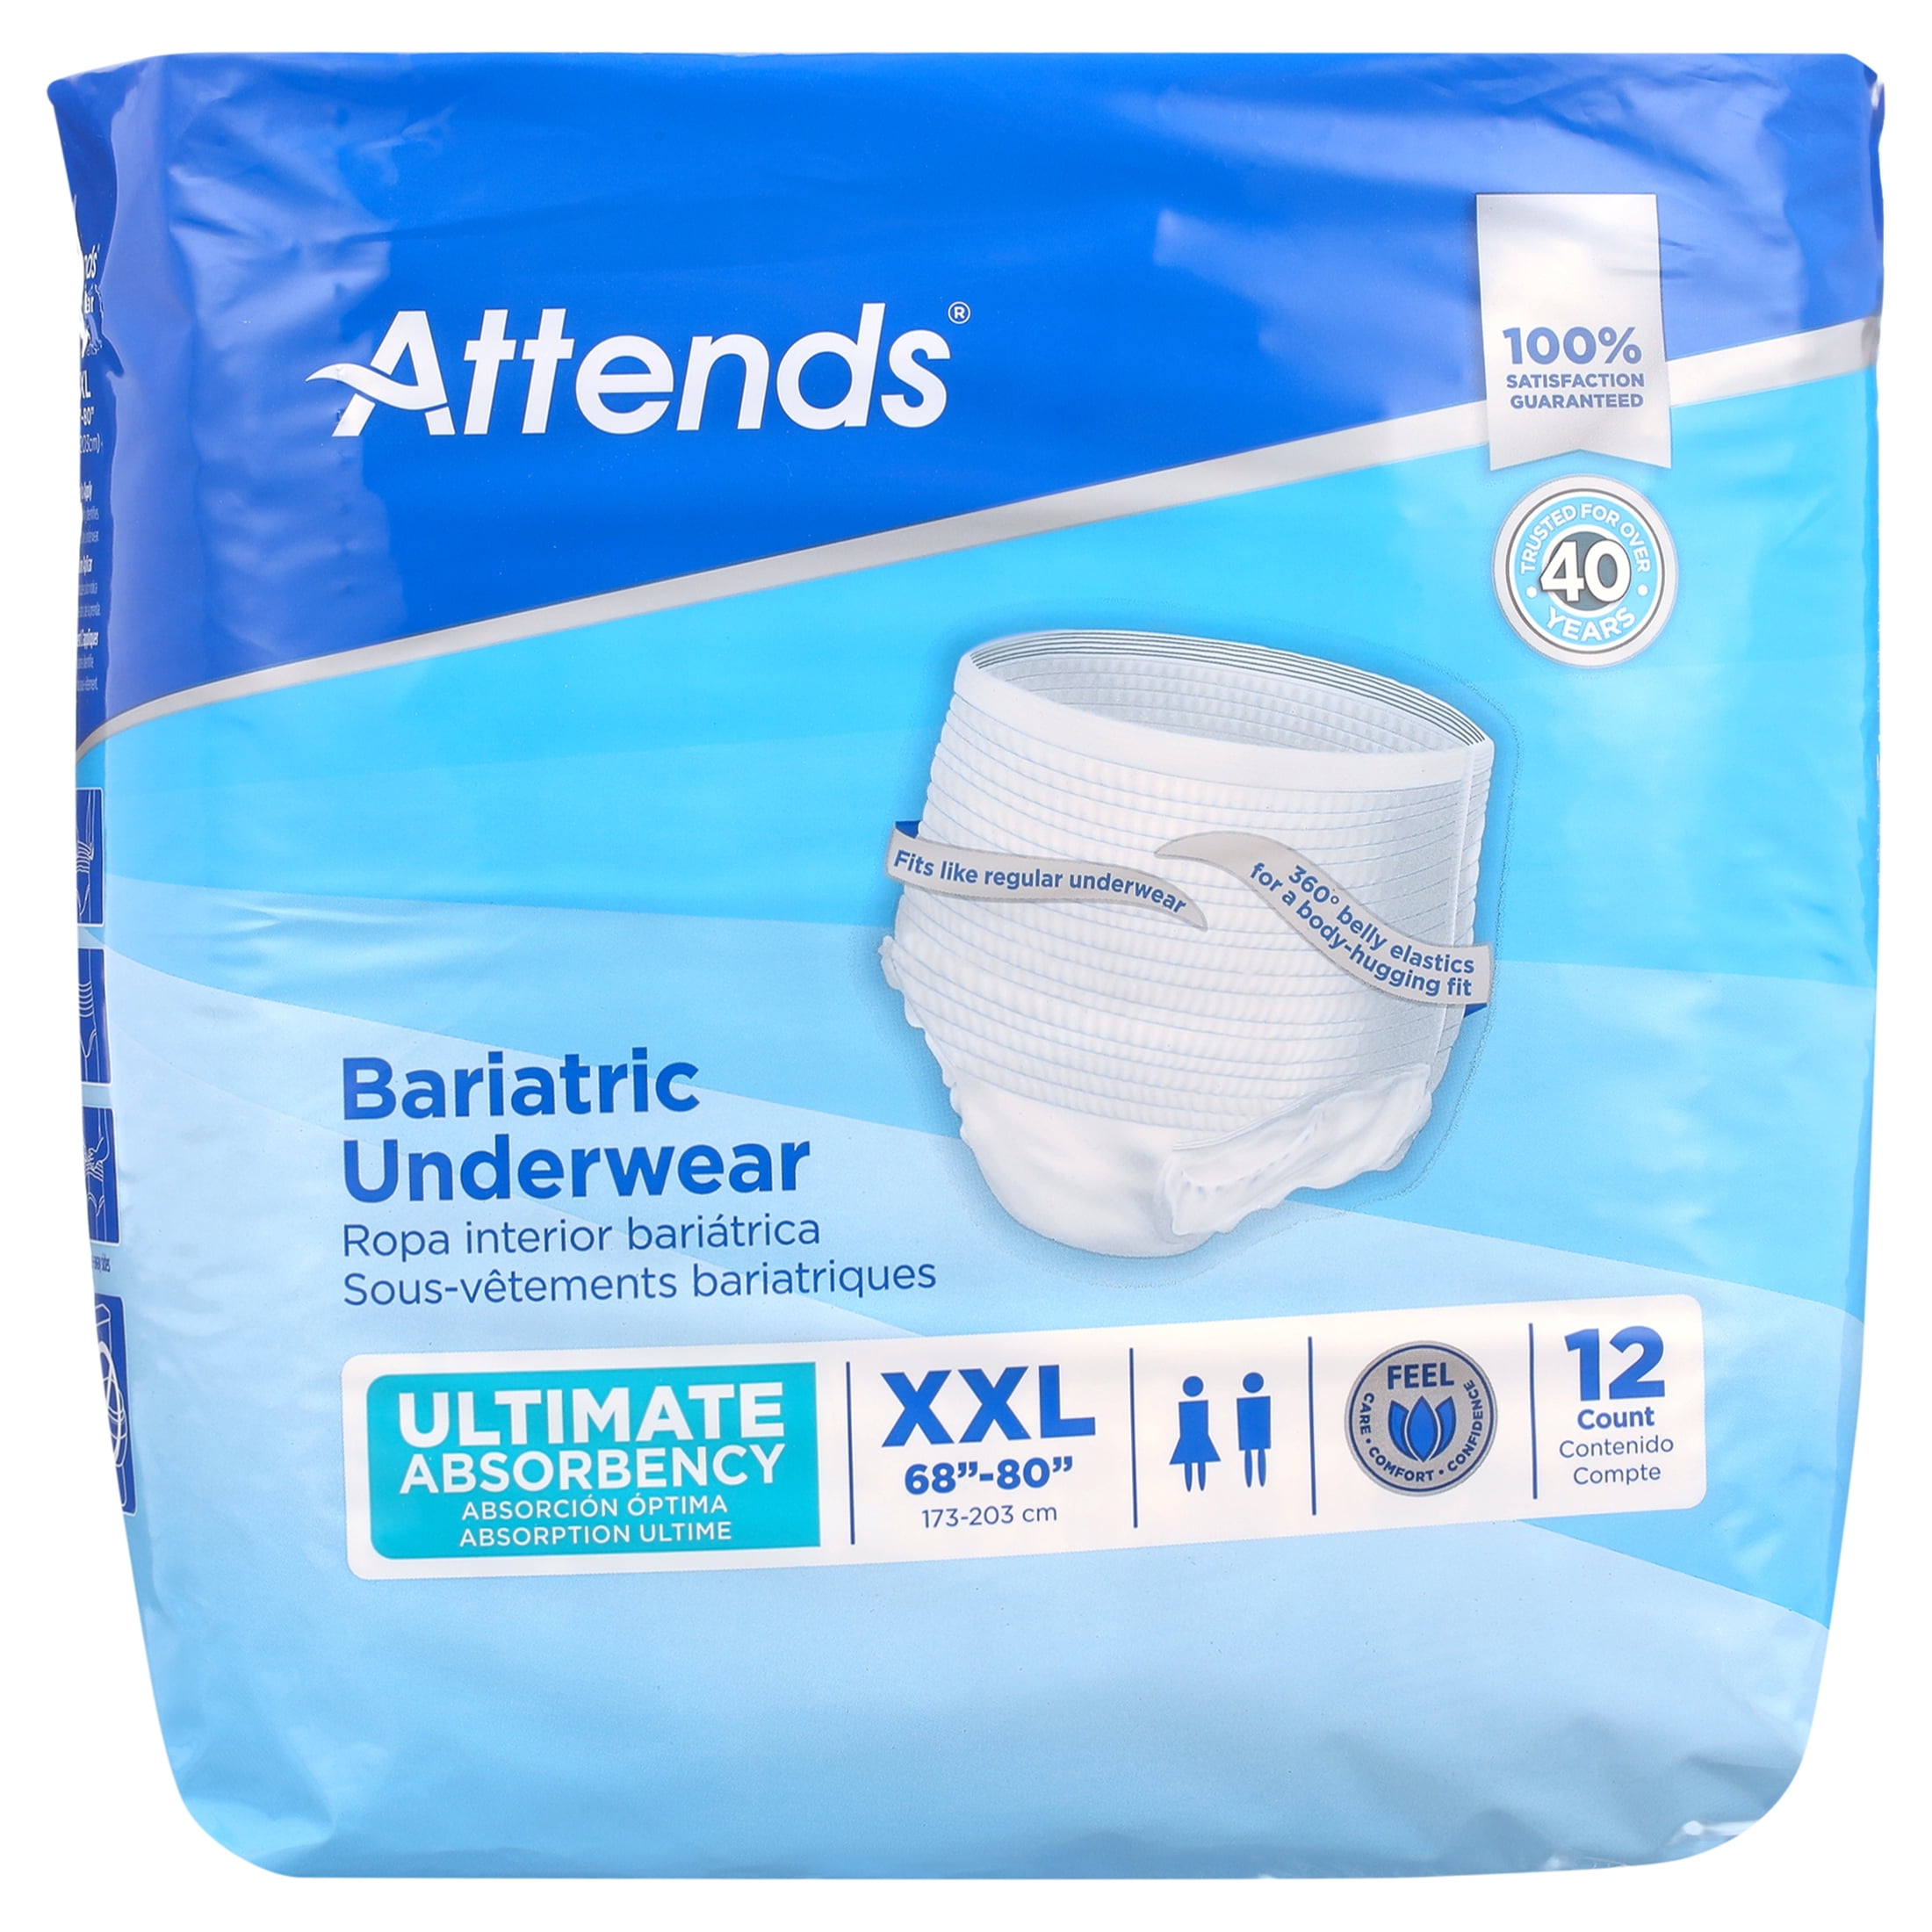 Attends Bariatric Underwear, 3X Large